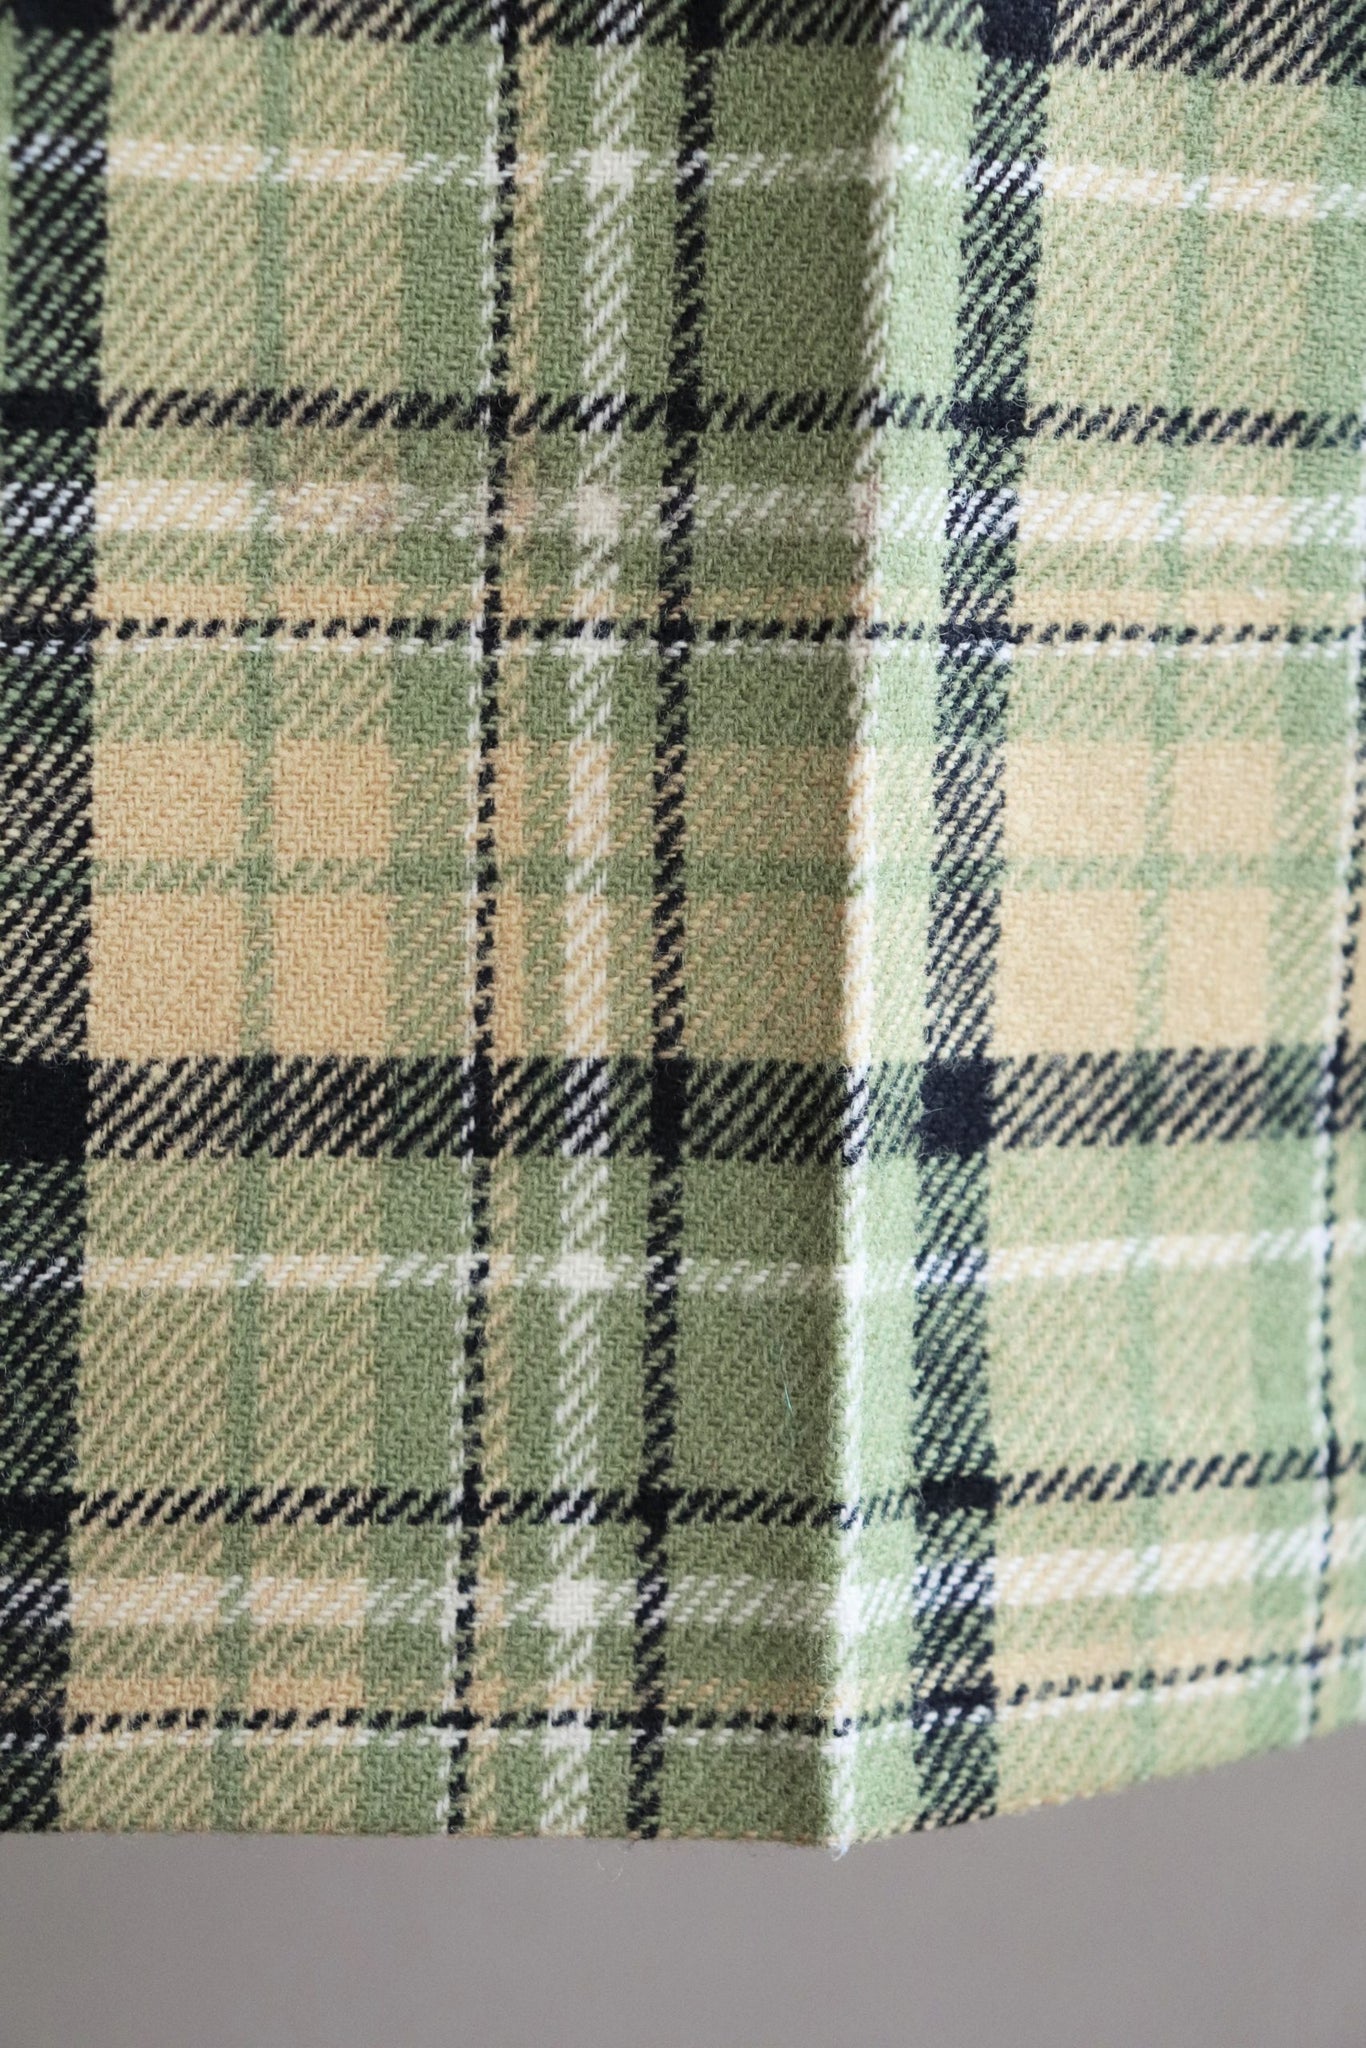 70s Pendleton Green Plaid Wool Suit